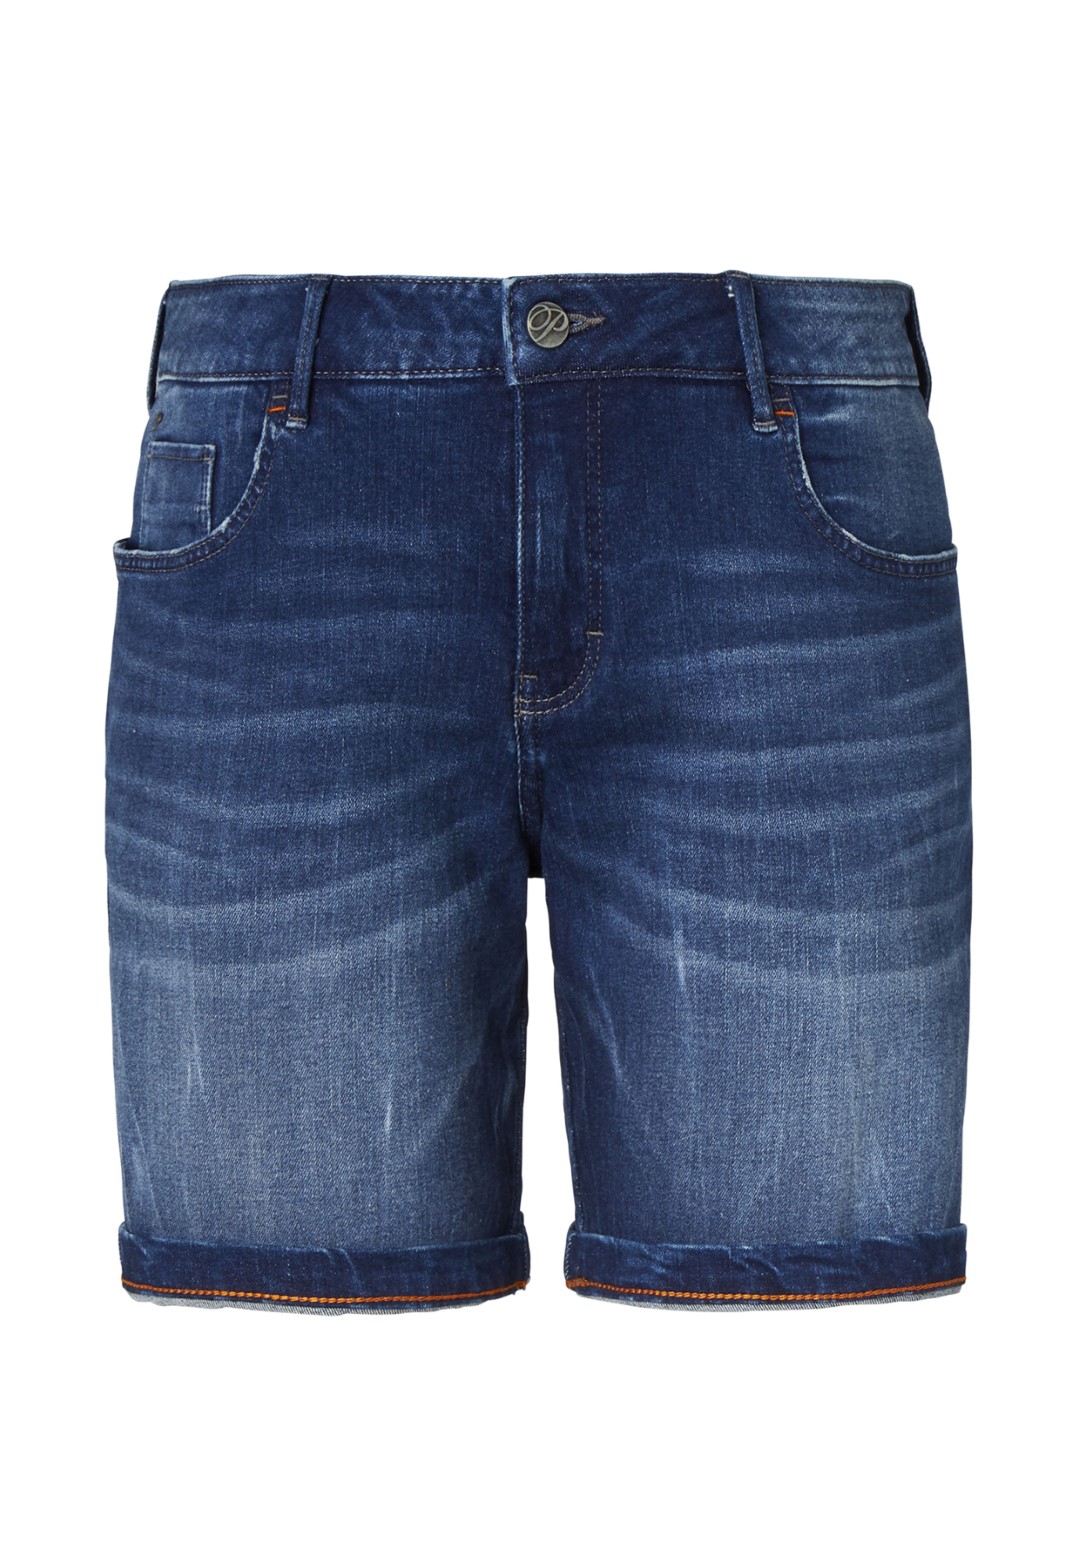 604114918000-4483_1_paddocks-jeans-sascha-bermuda-low-rise-tapered-leg.jpg